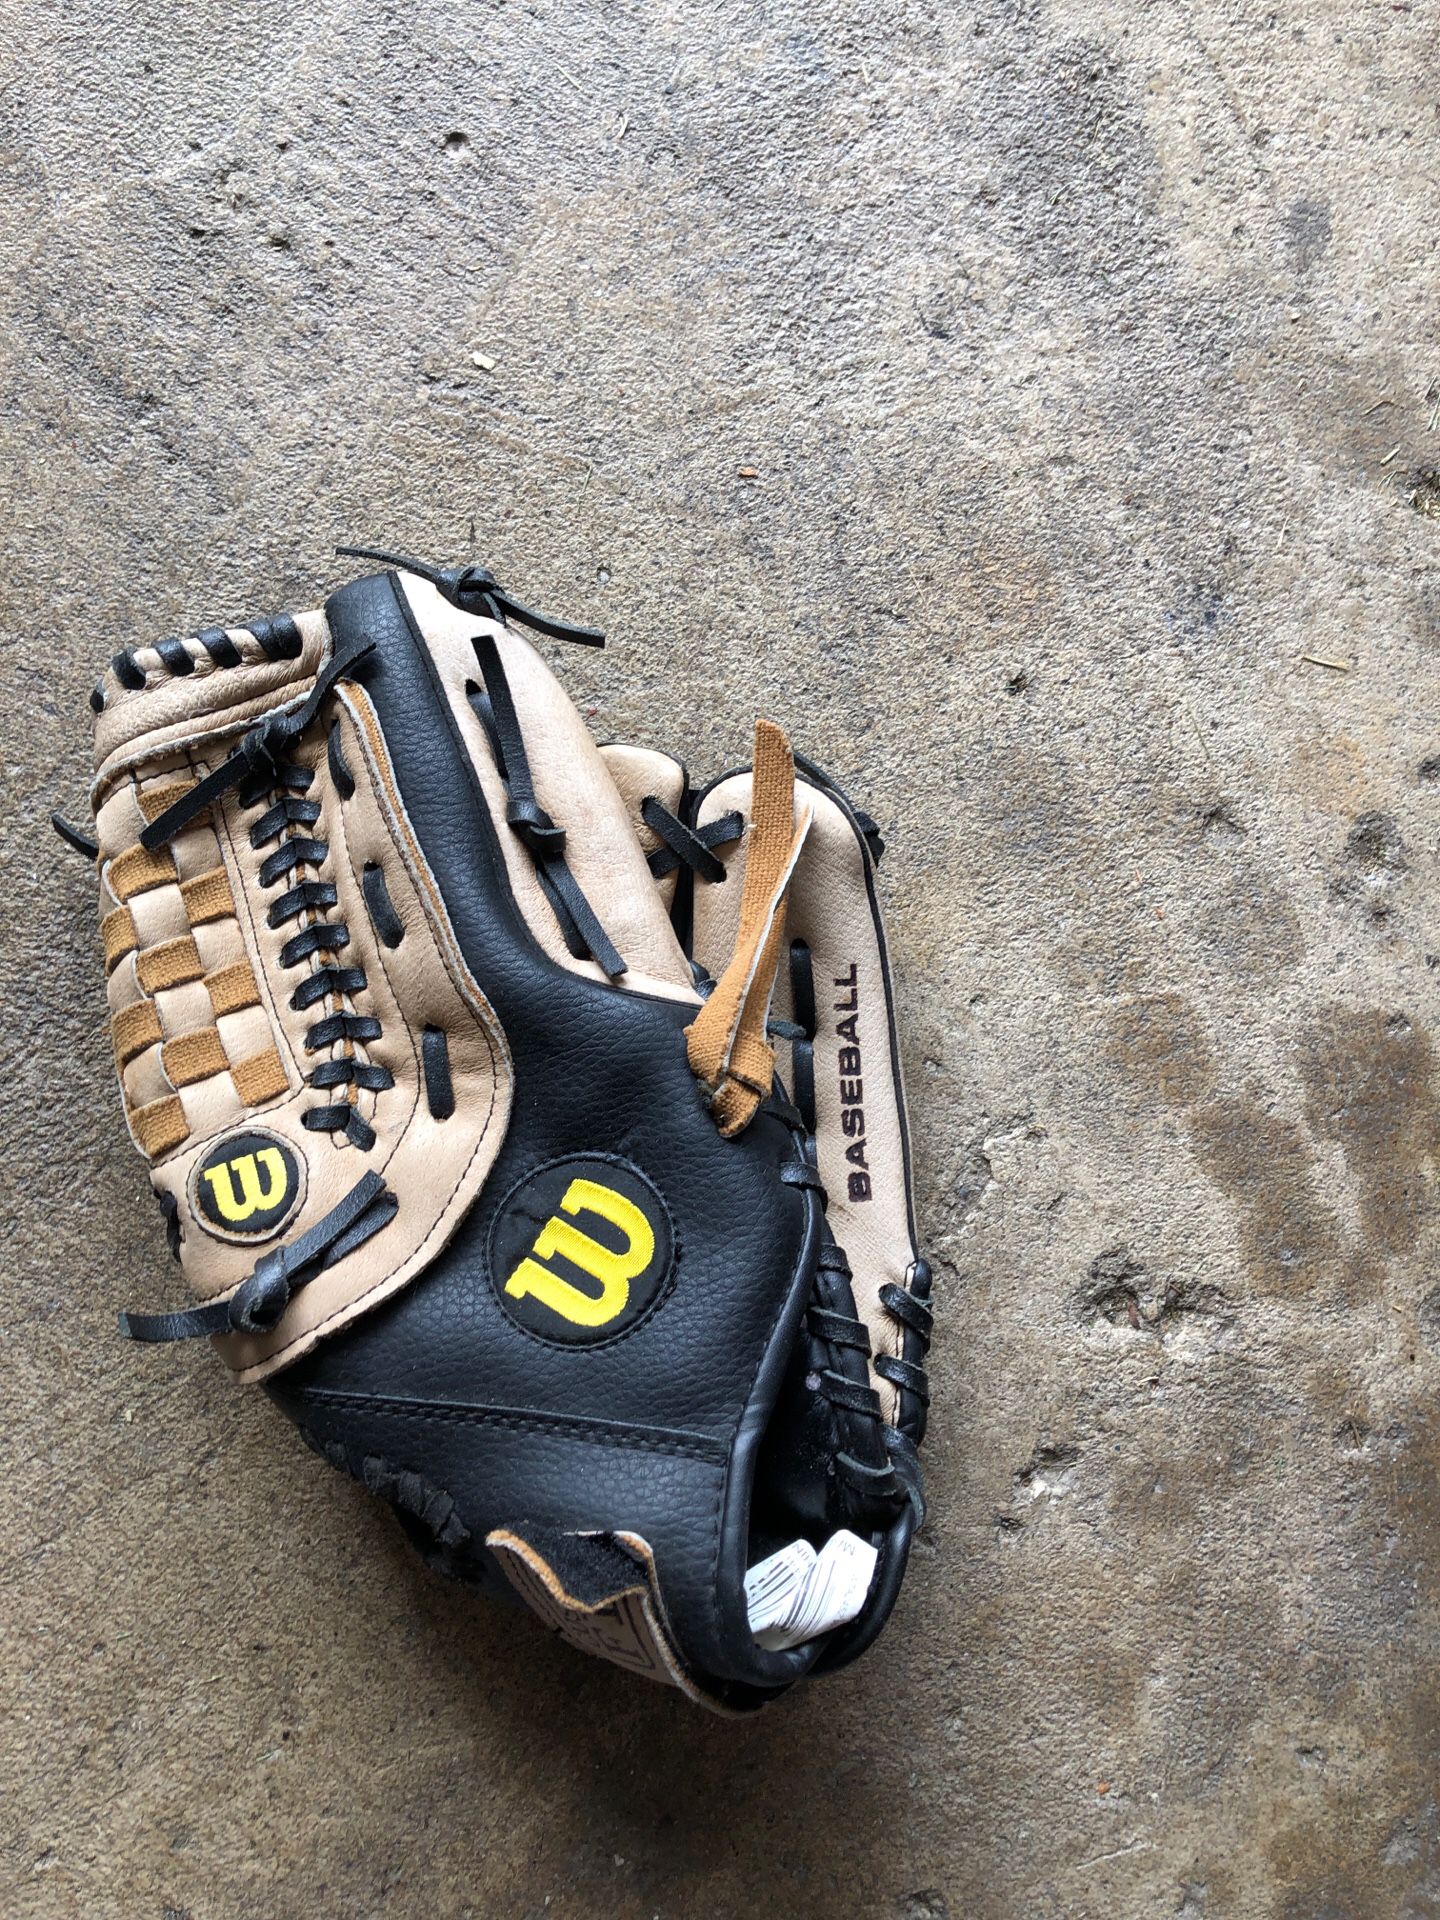 Wilson (custom fit) baseball glove brand new